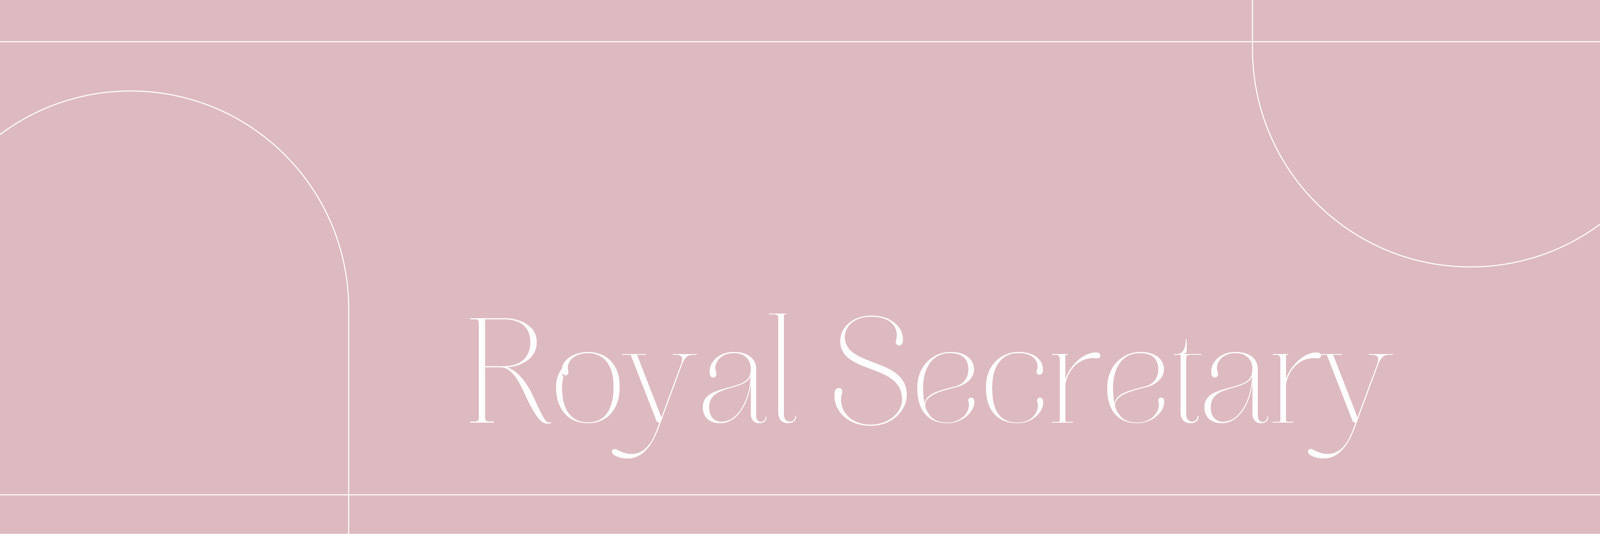 Royal Secretary